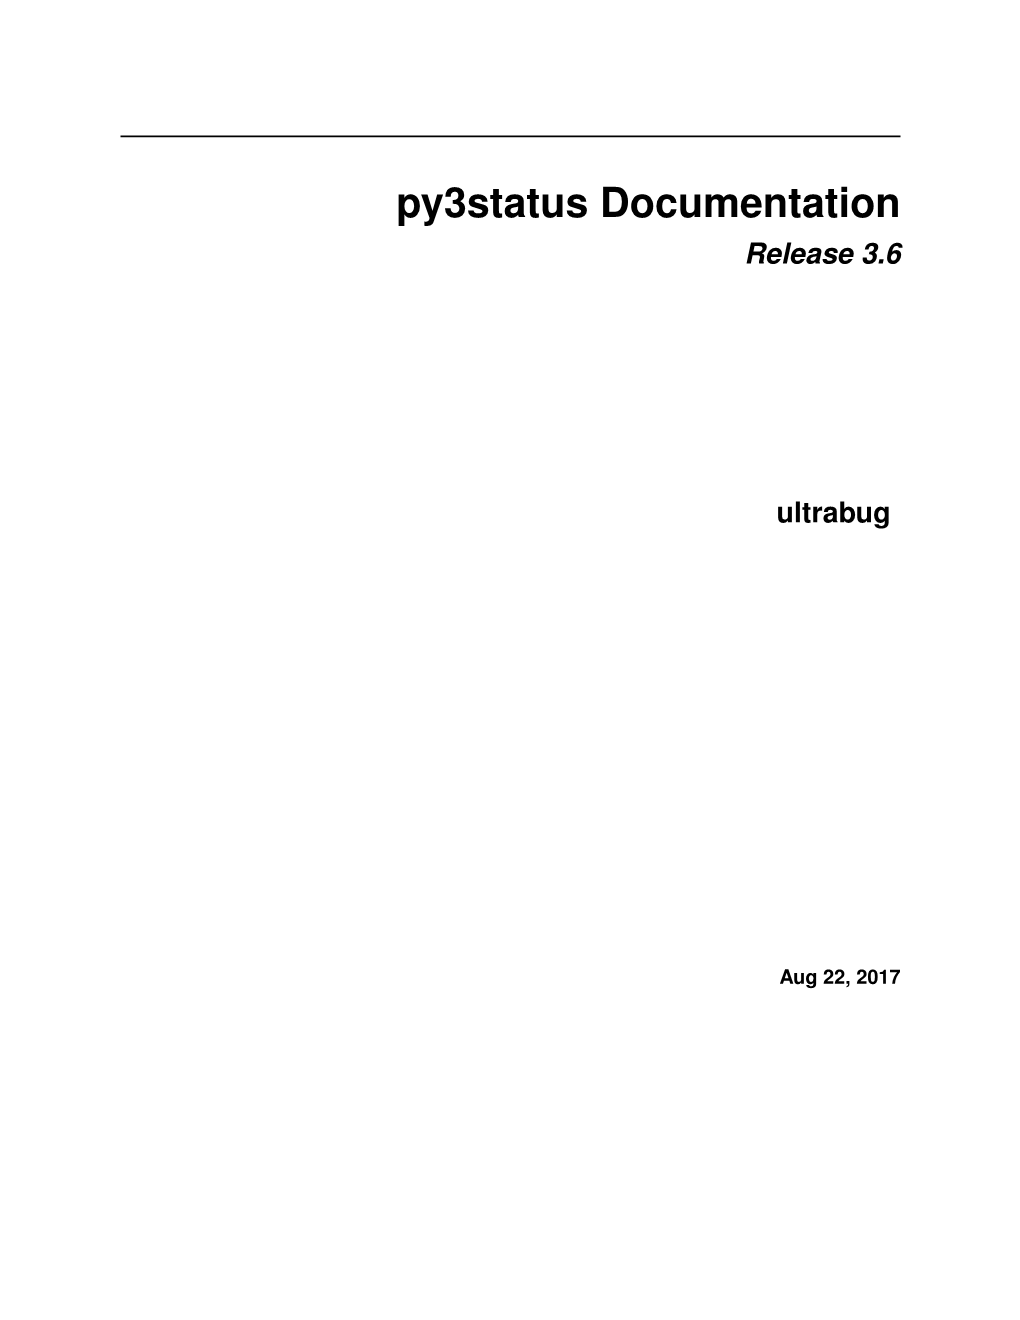 Py3status Documentation Release 3.6